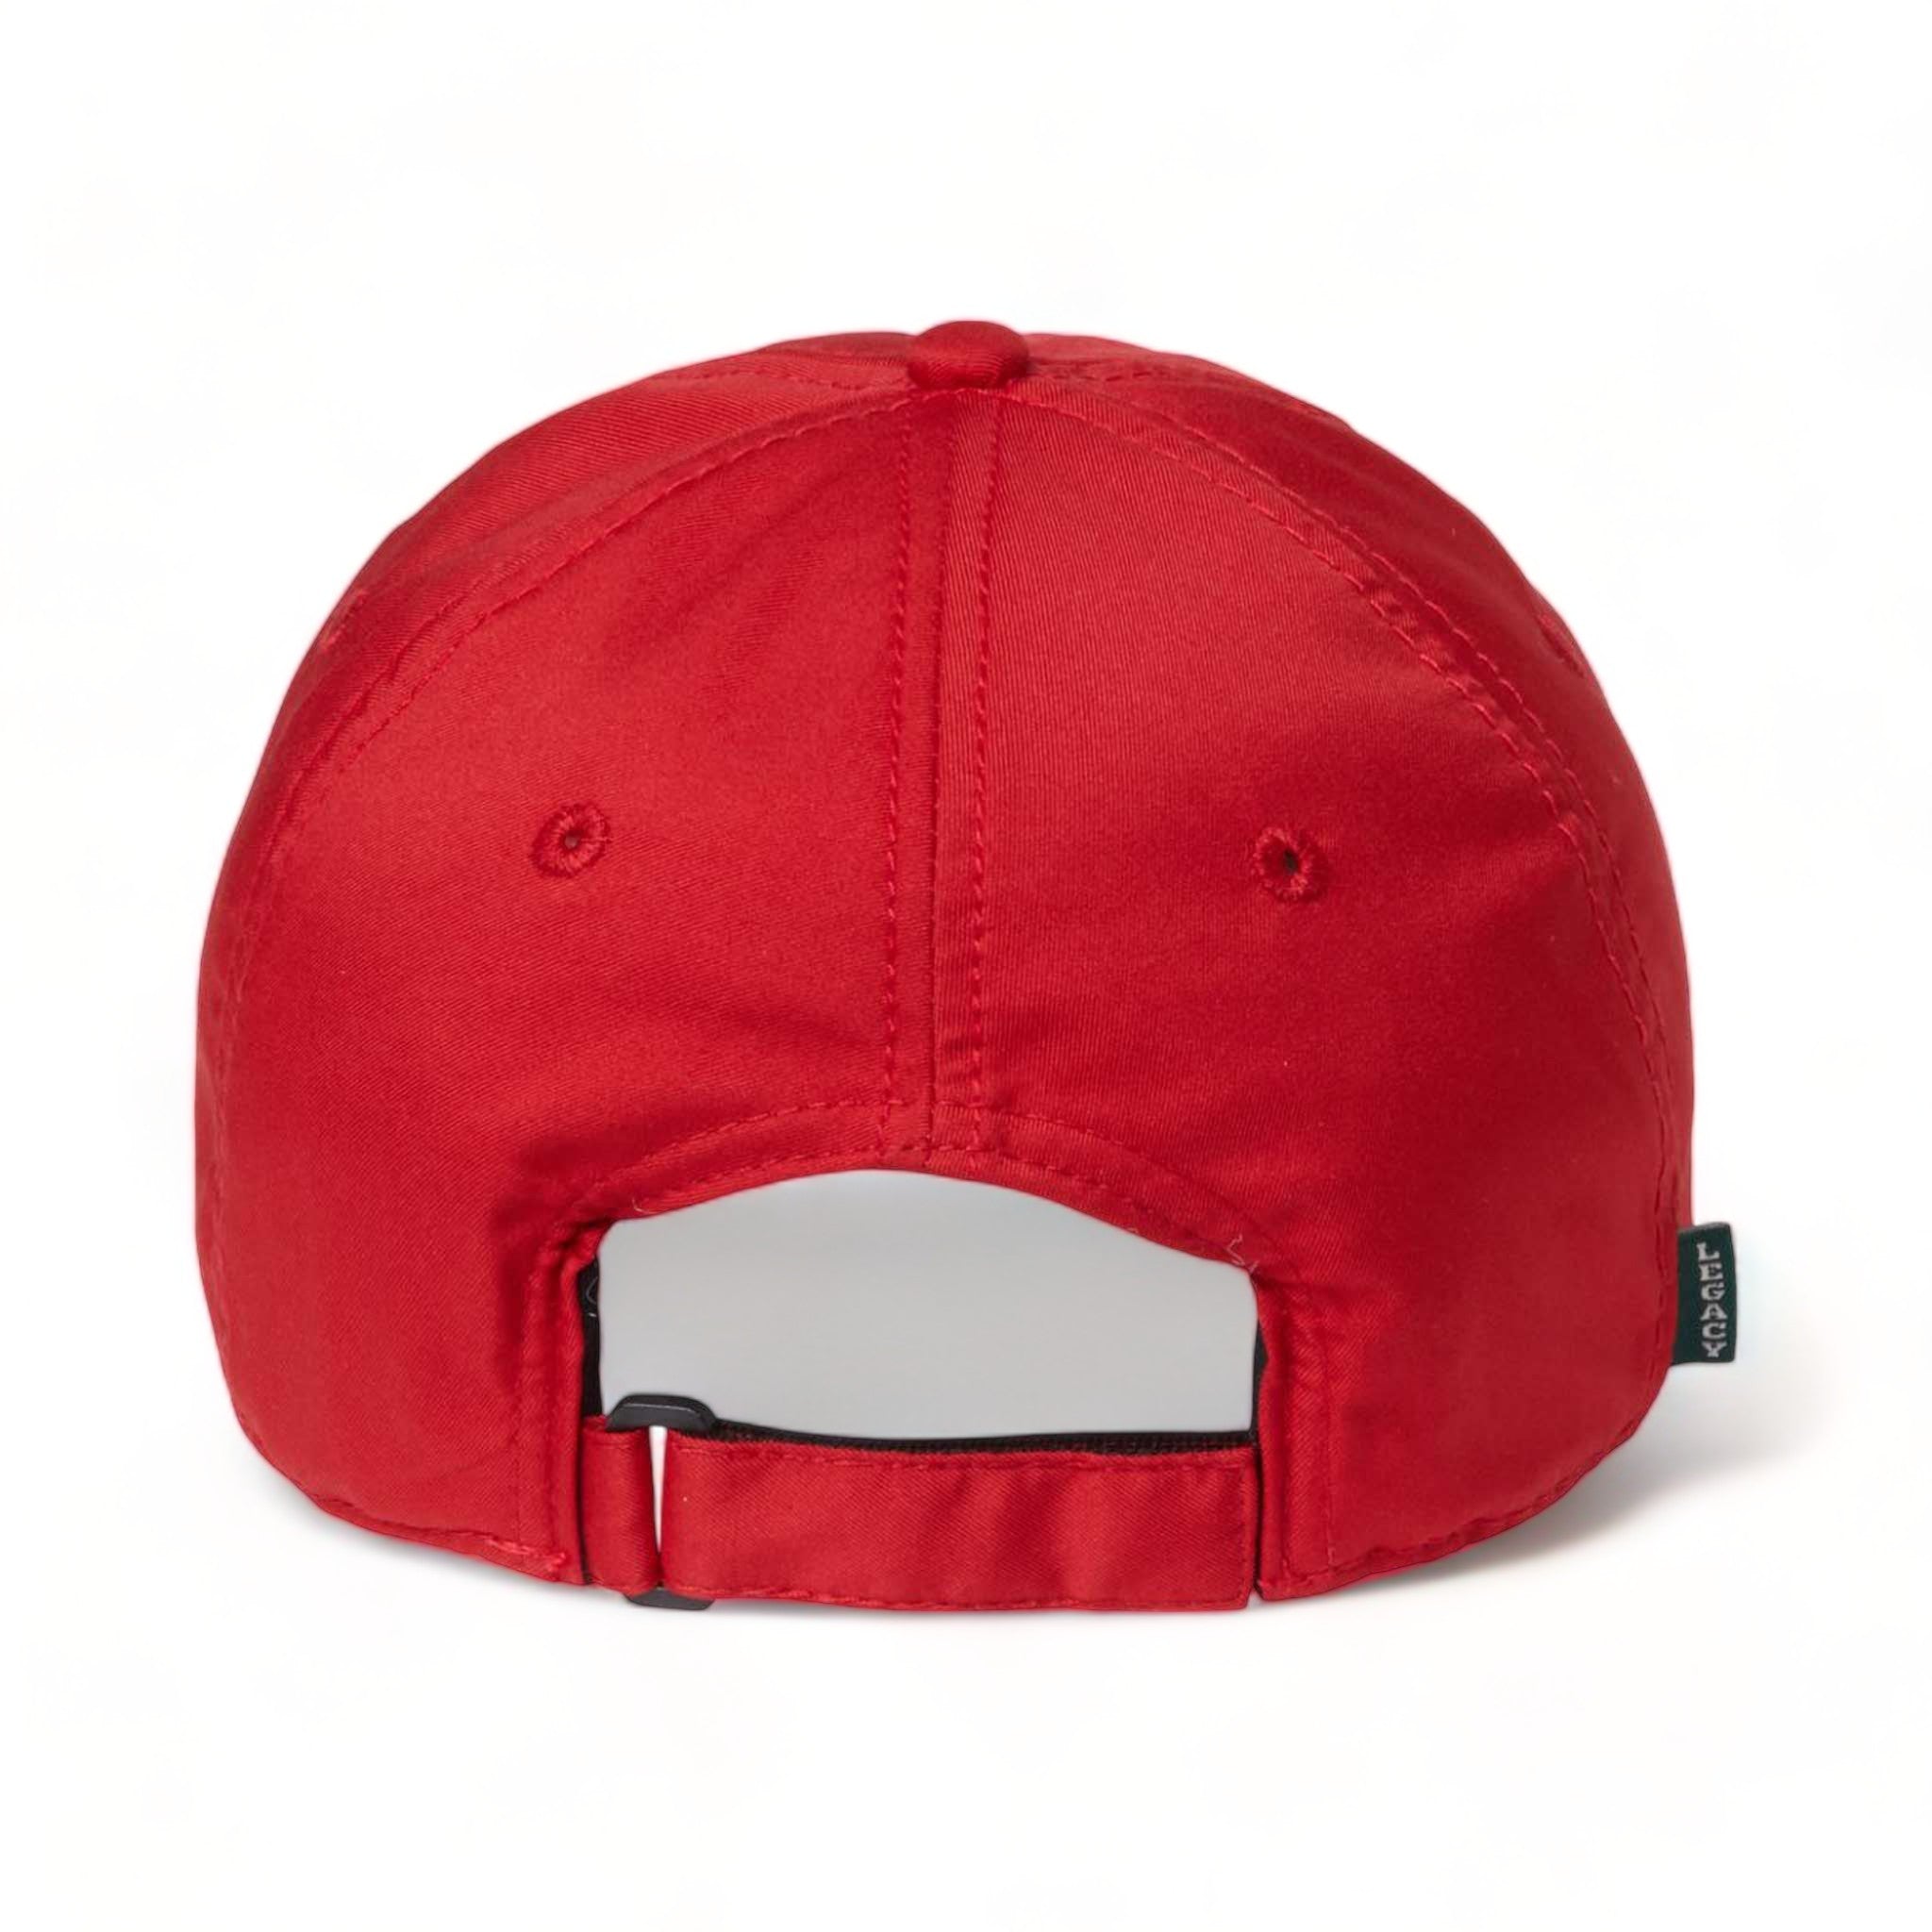 Back view of LEGACY CFA custom hat in scarlet